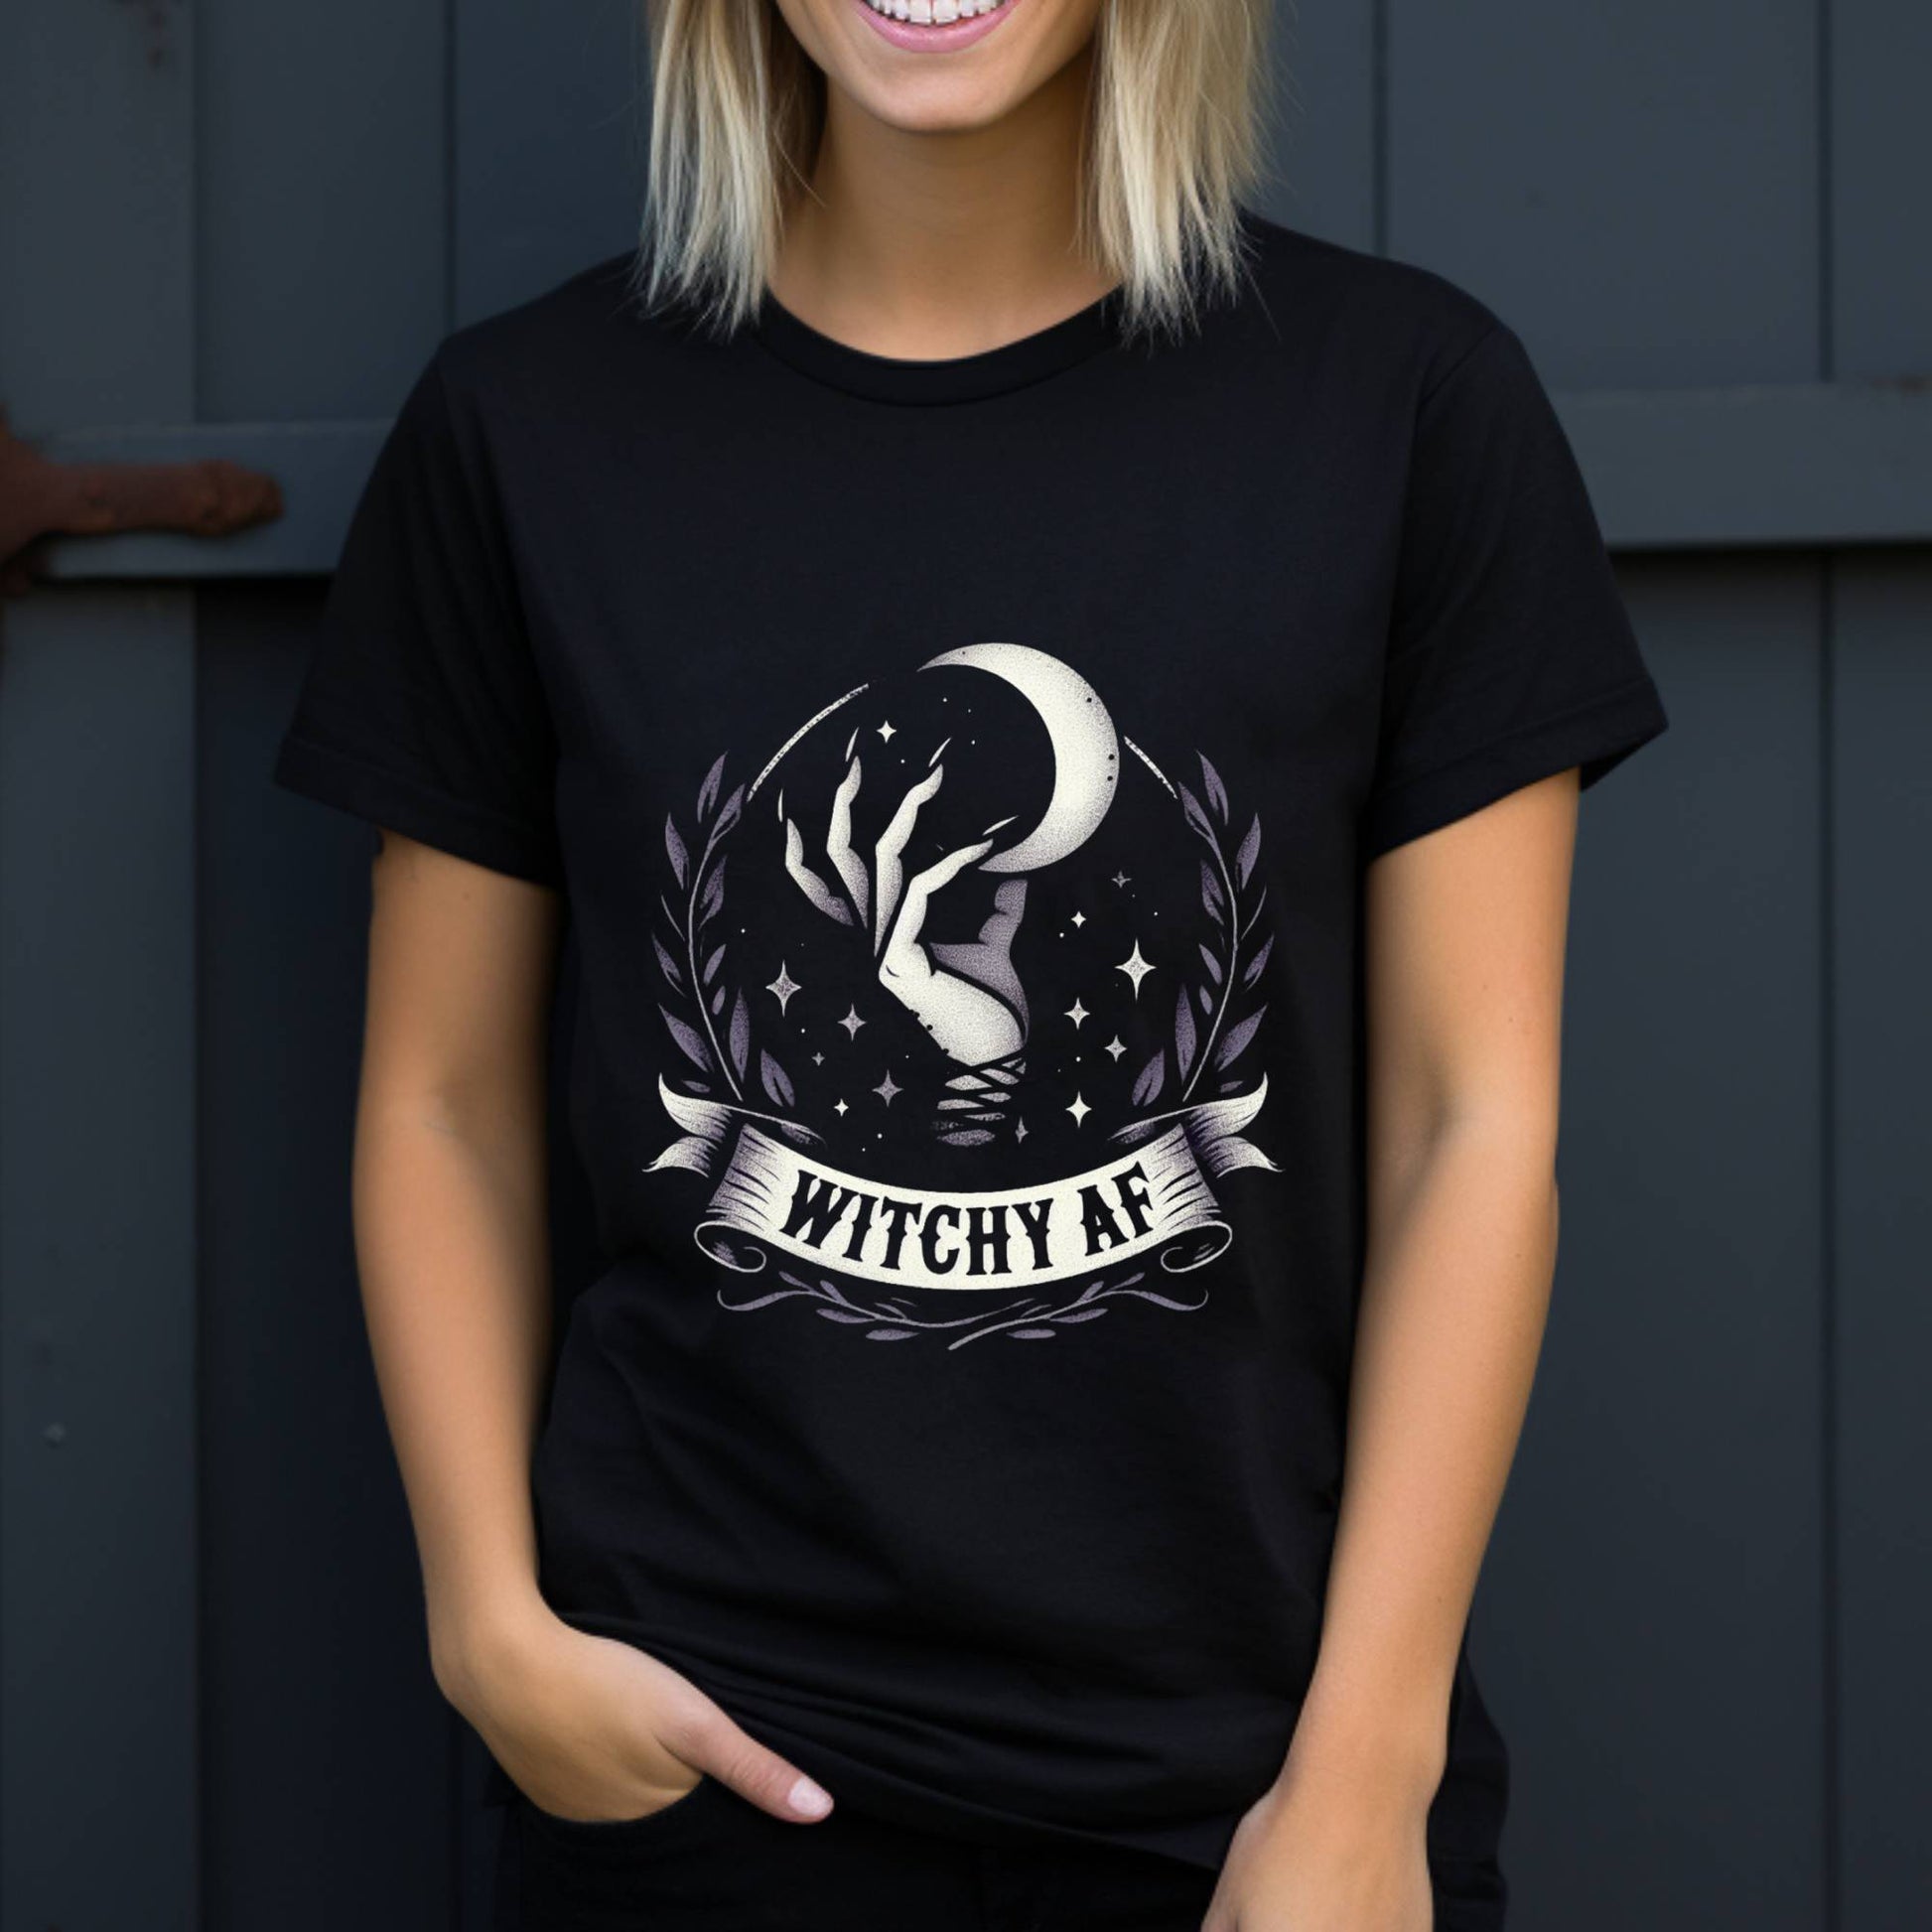 Witchy AF Tee ShirtT - ShirtVTZdesignsBlackSCrew neckDTGgothic